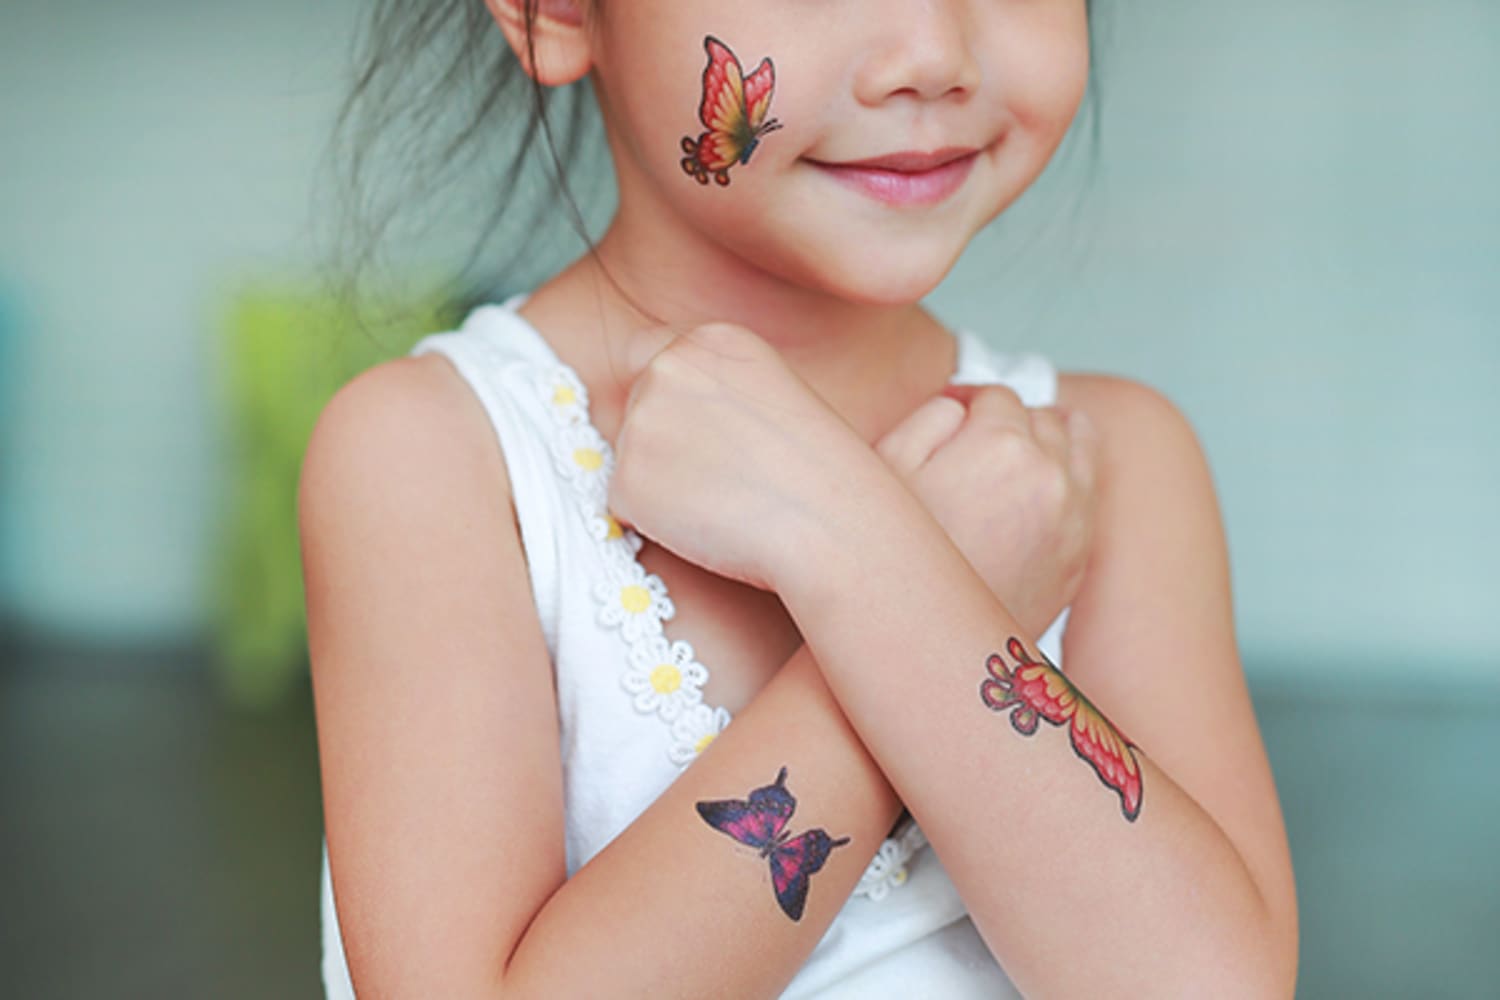  Temporary Shimmery Tattoo Studio Kit for Kids